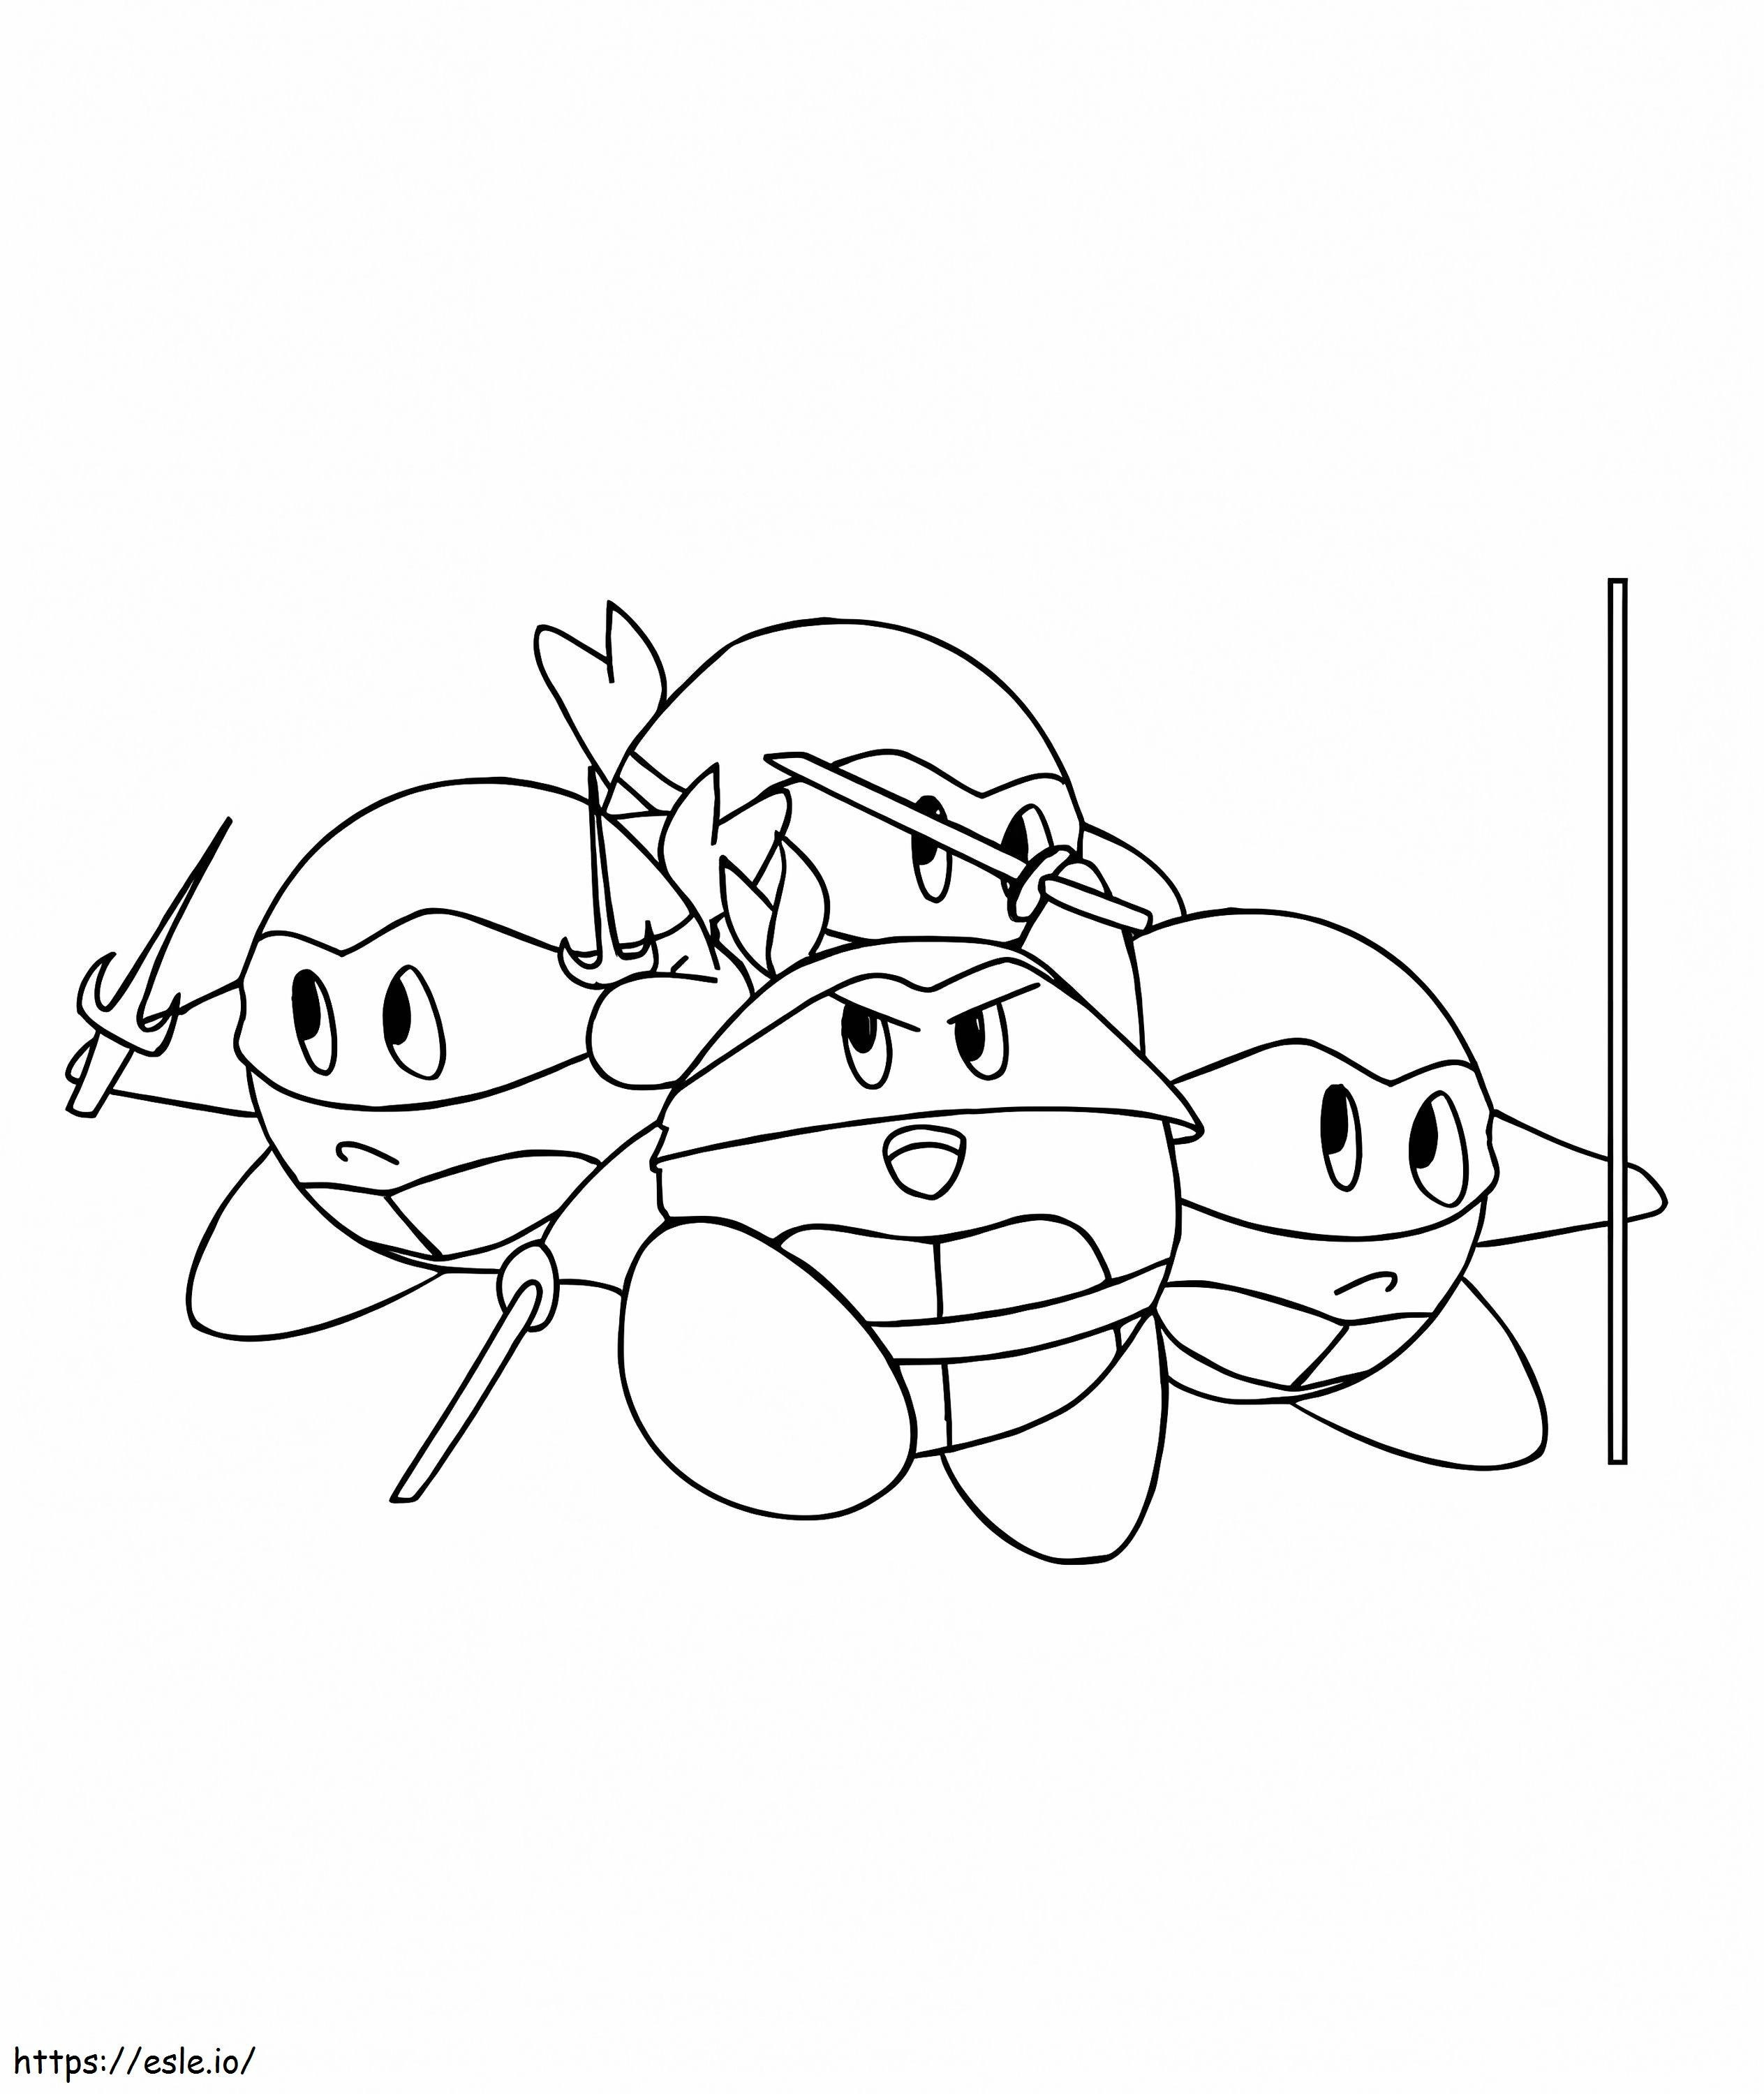 Ninja Kirby coloring page